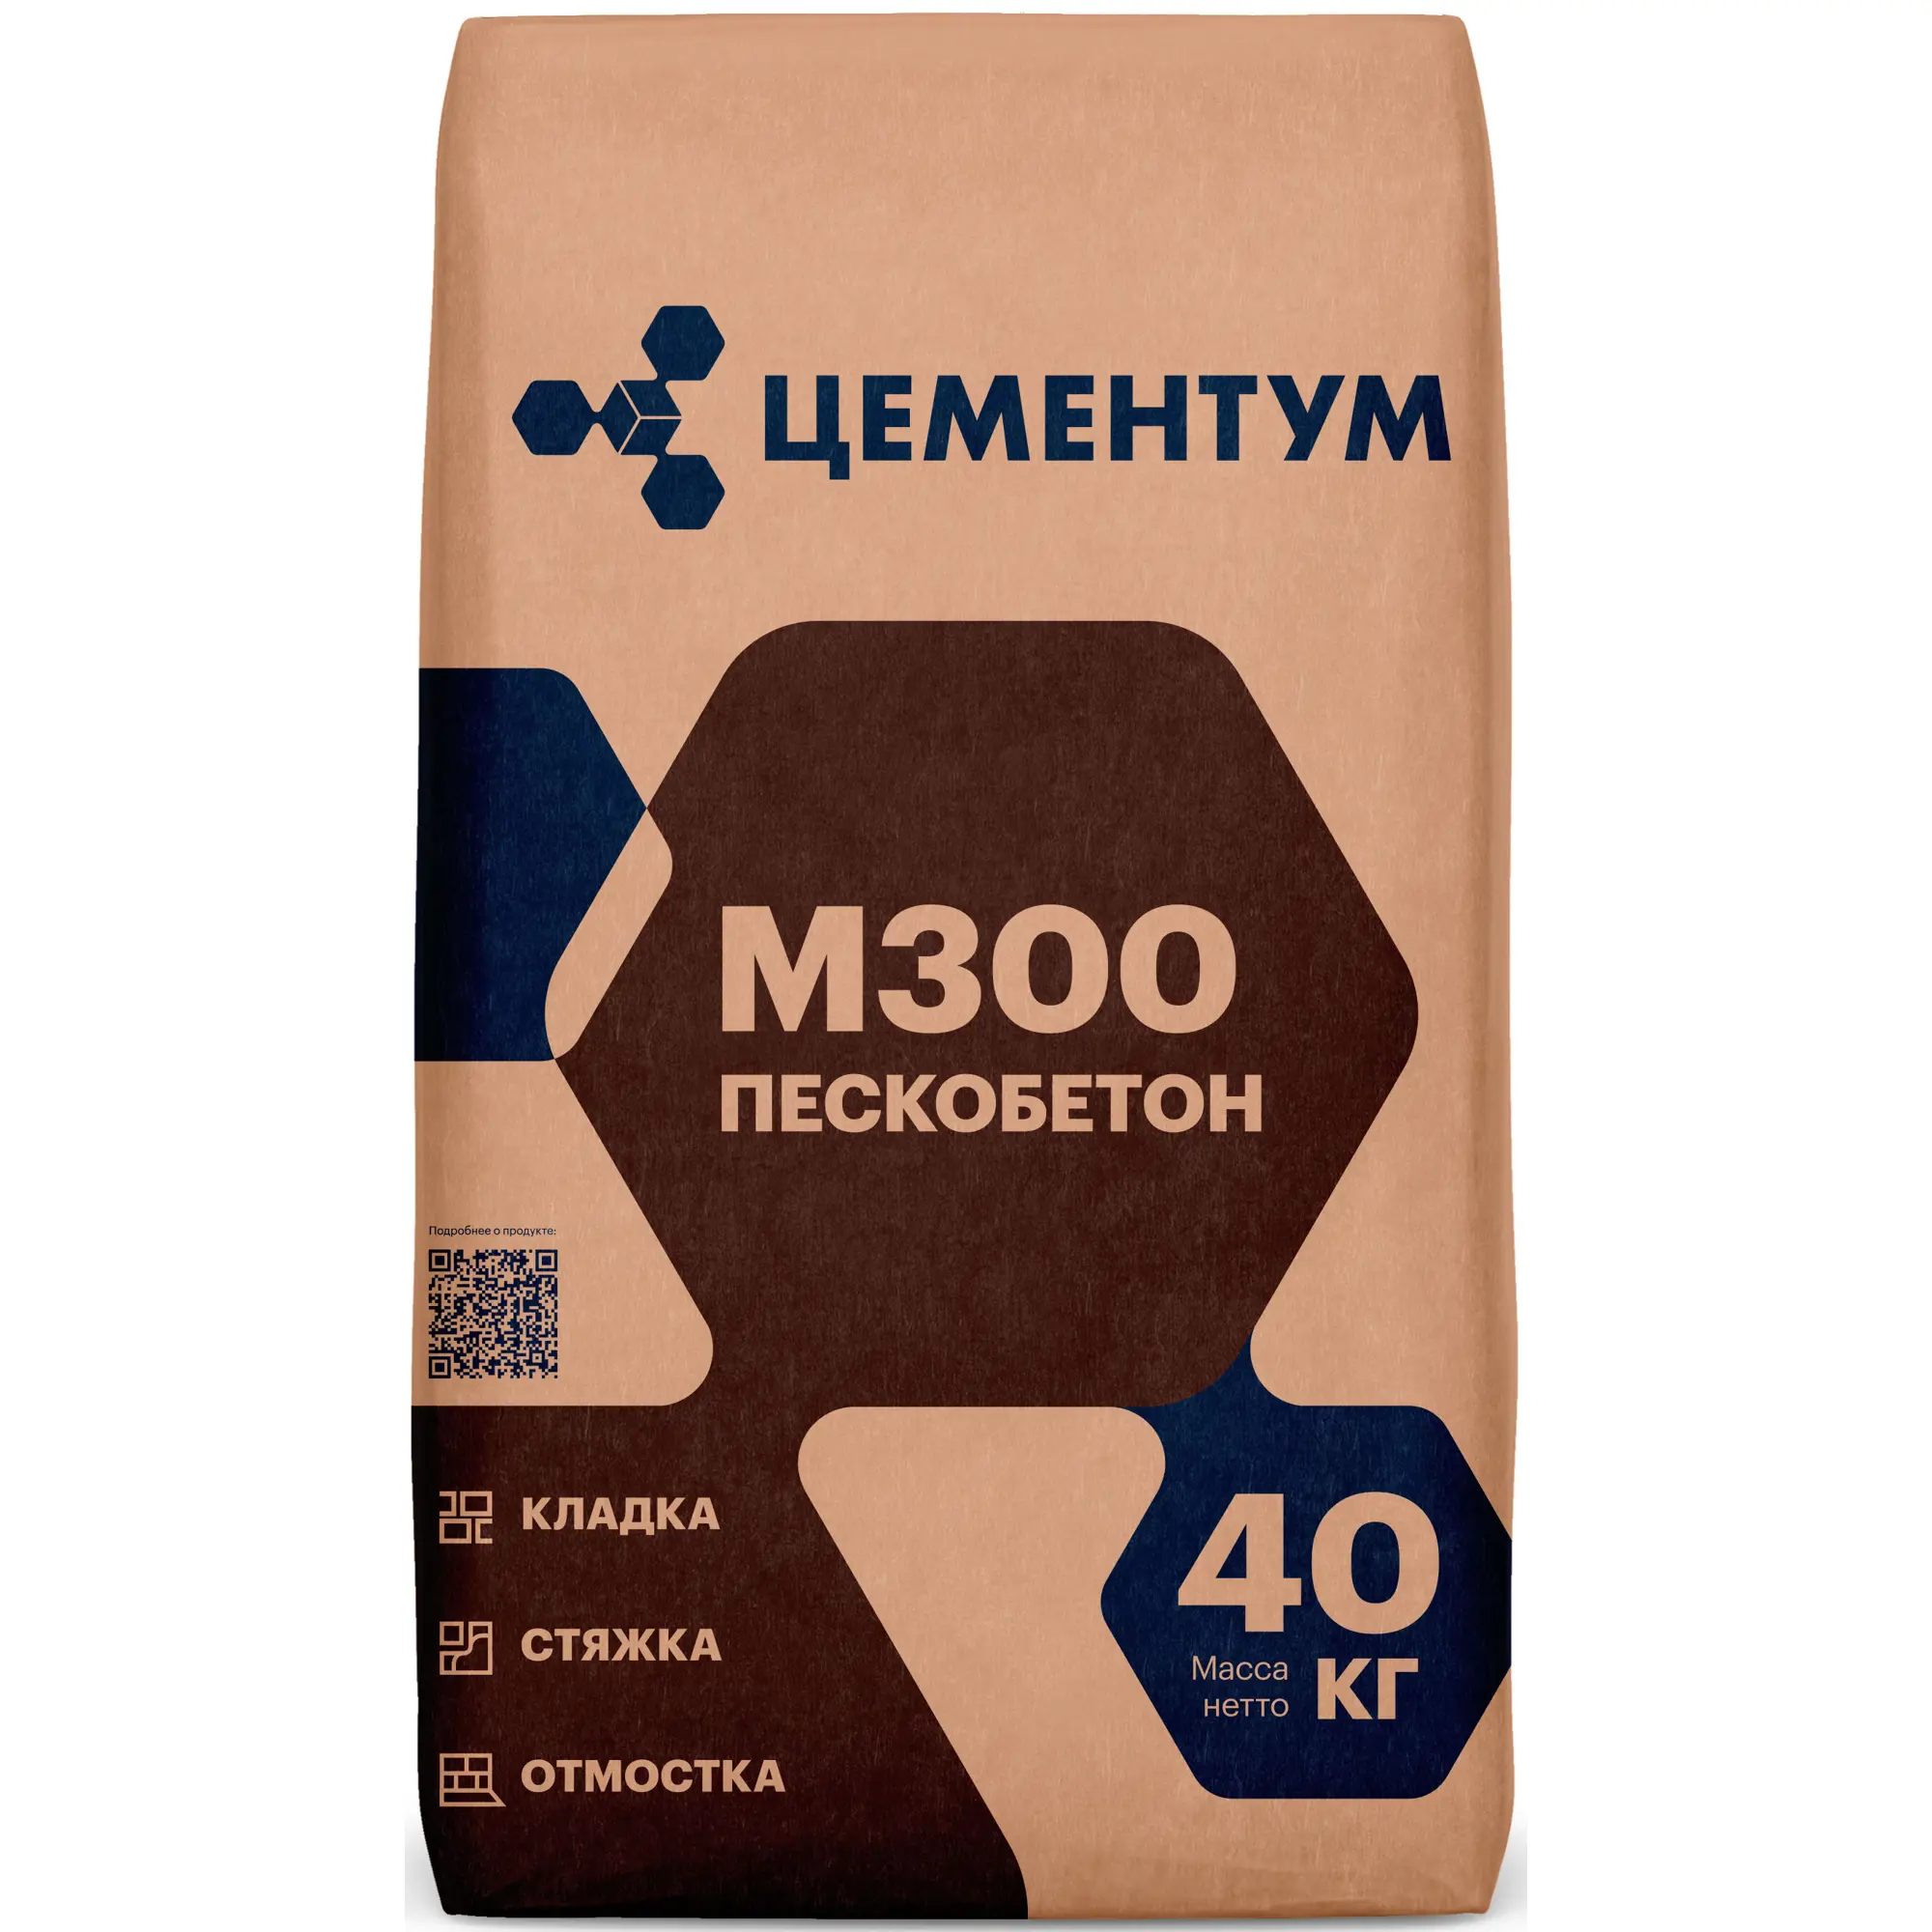 Холсим М300 пескобетон Цементум (Holcim) 40 кг